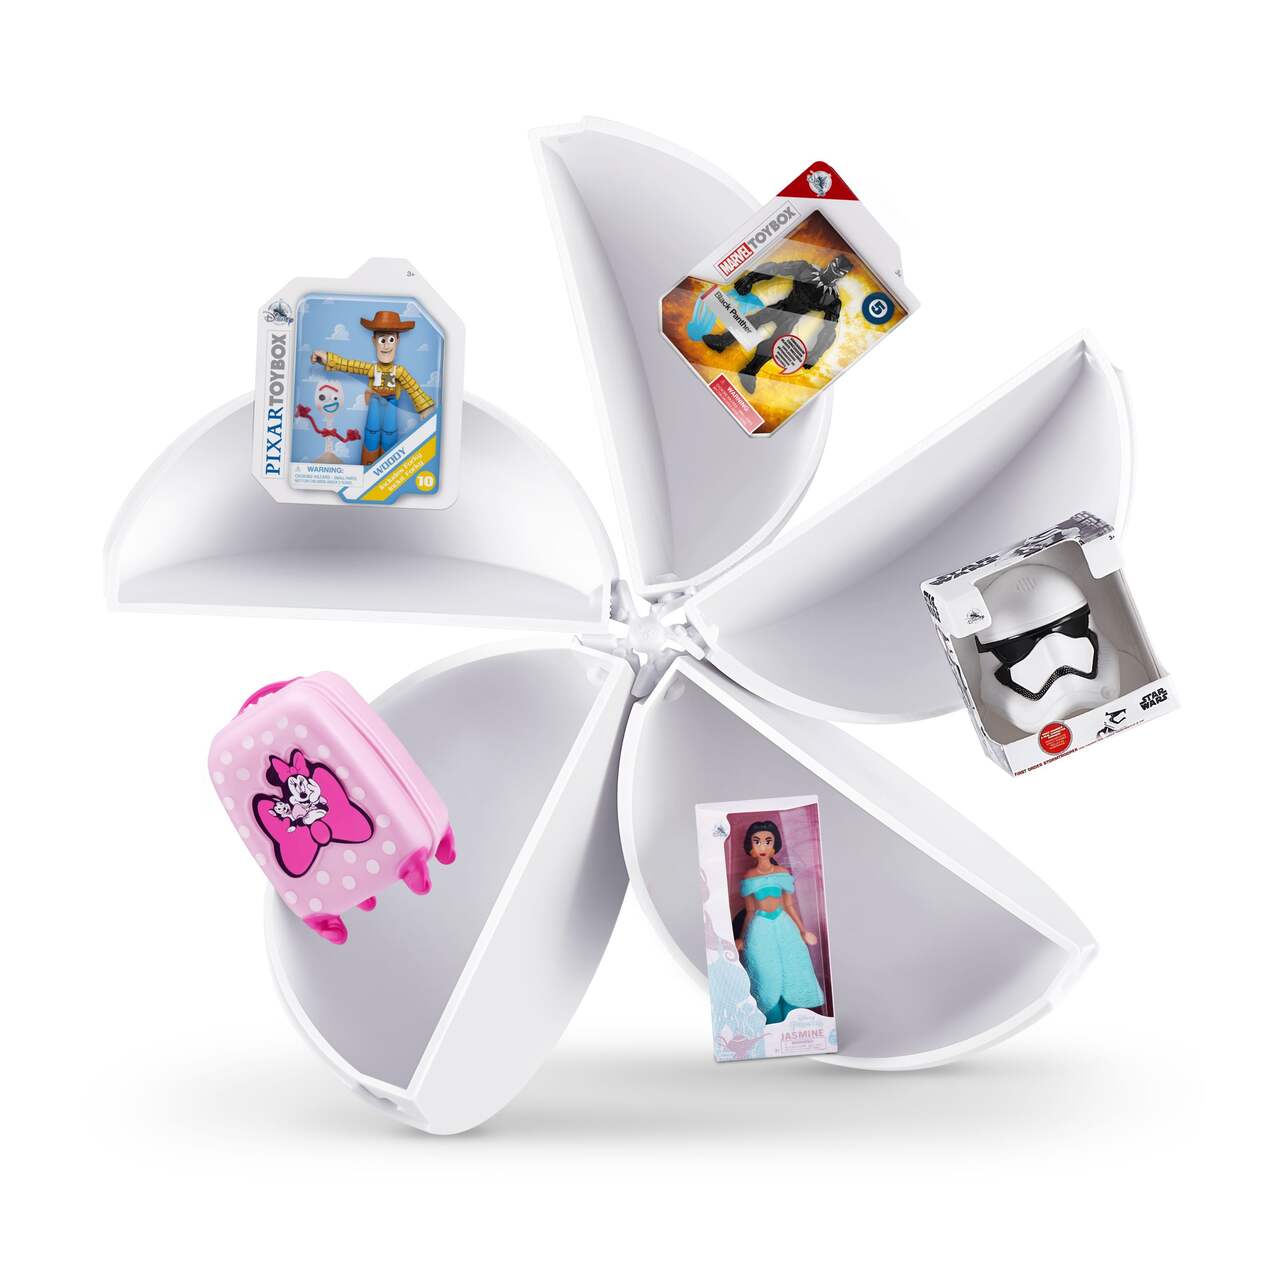 ZURU 5 Surprise Mini Brands Disney Store Series 2 Capsule